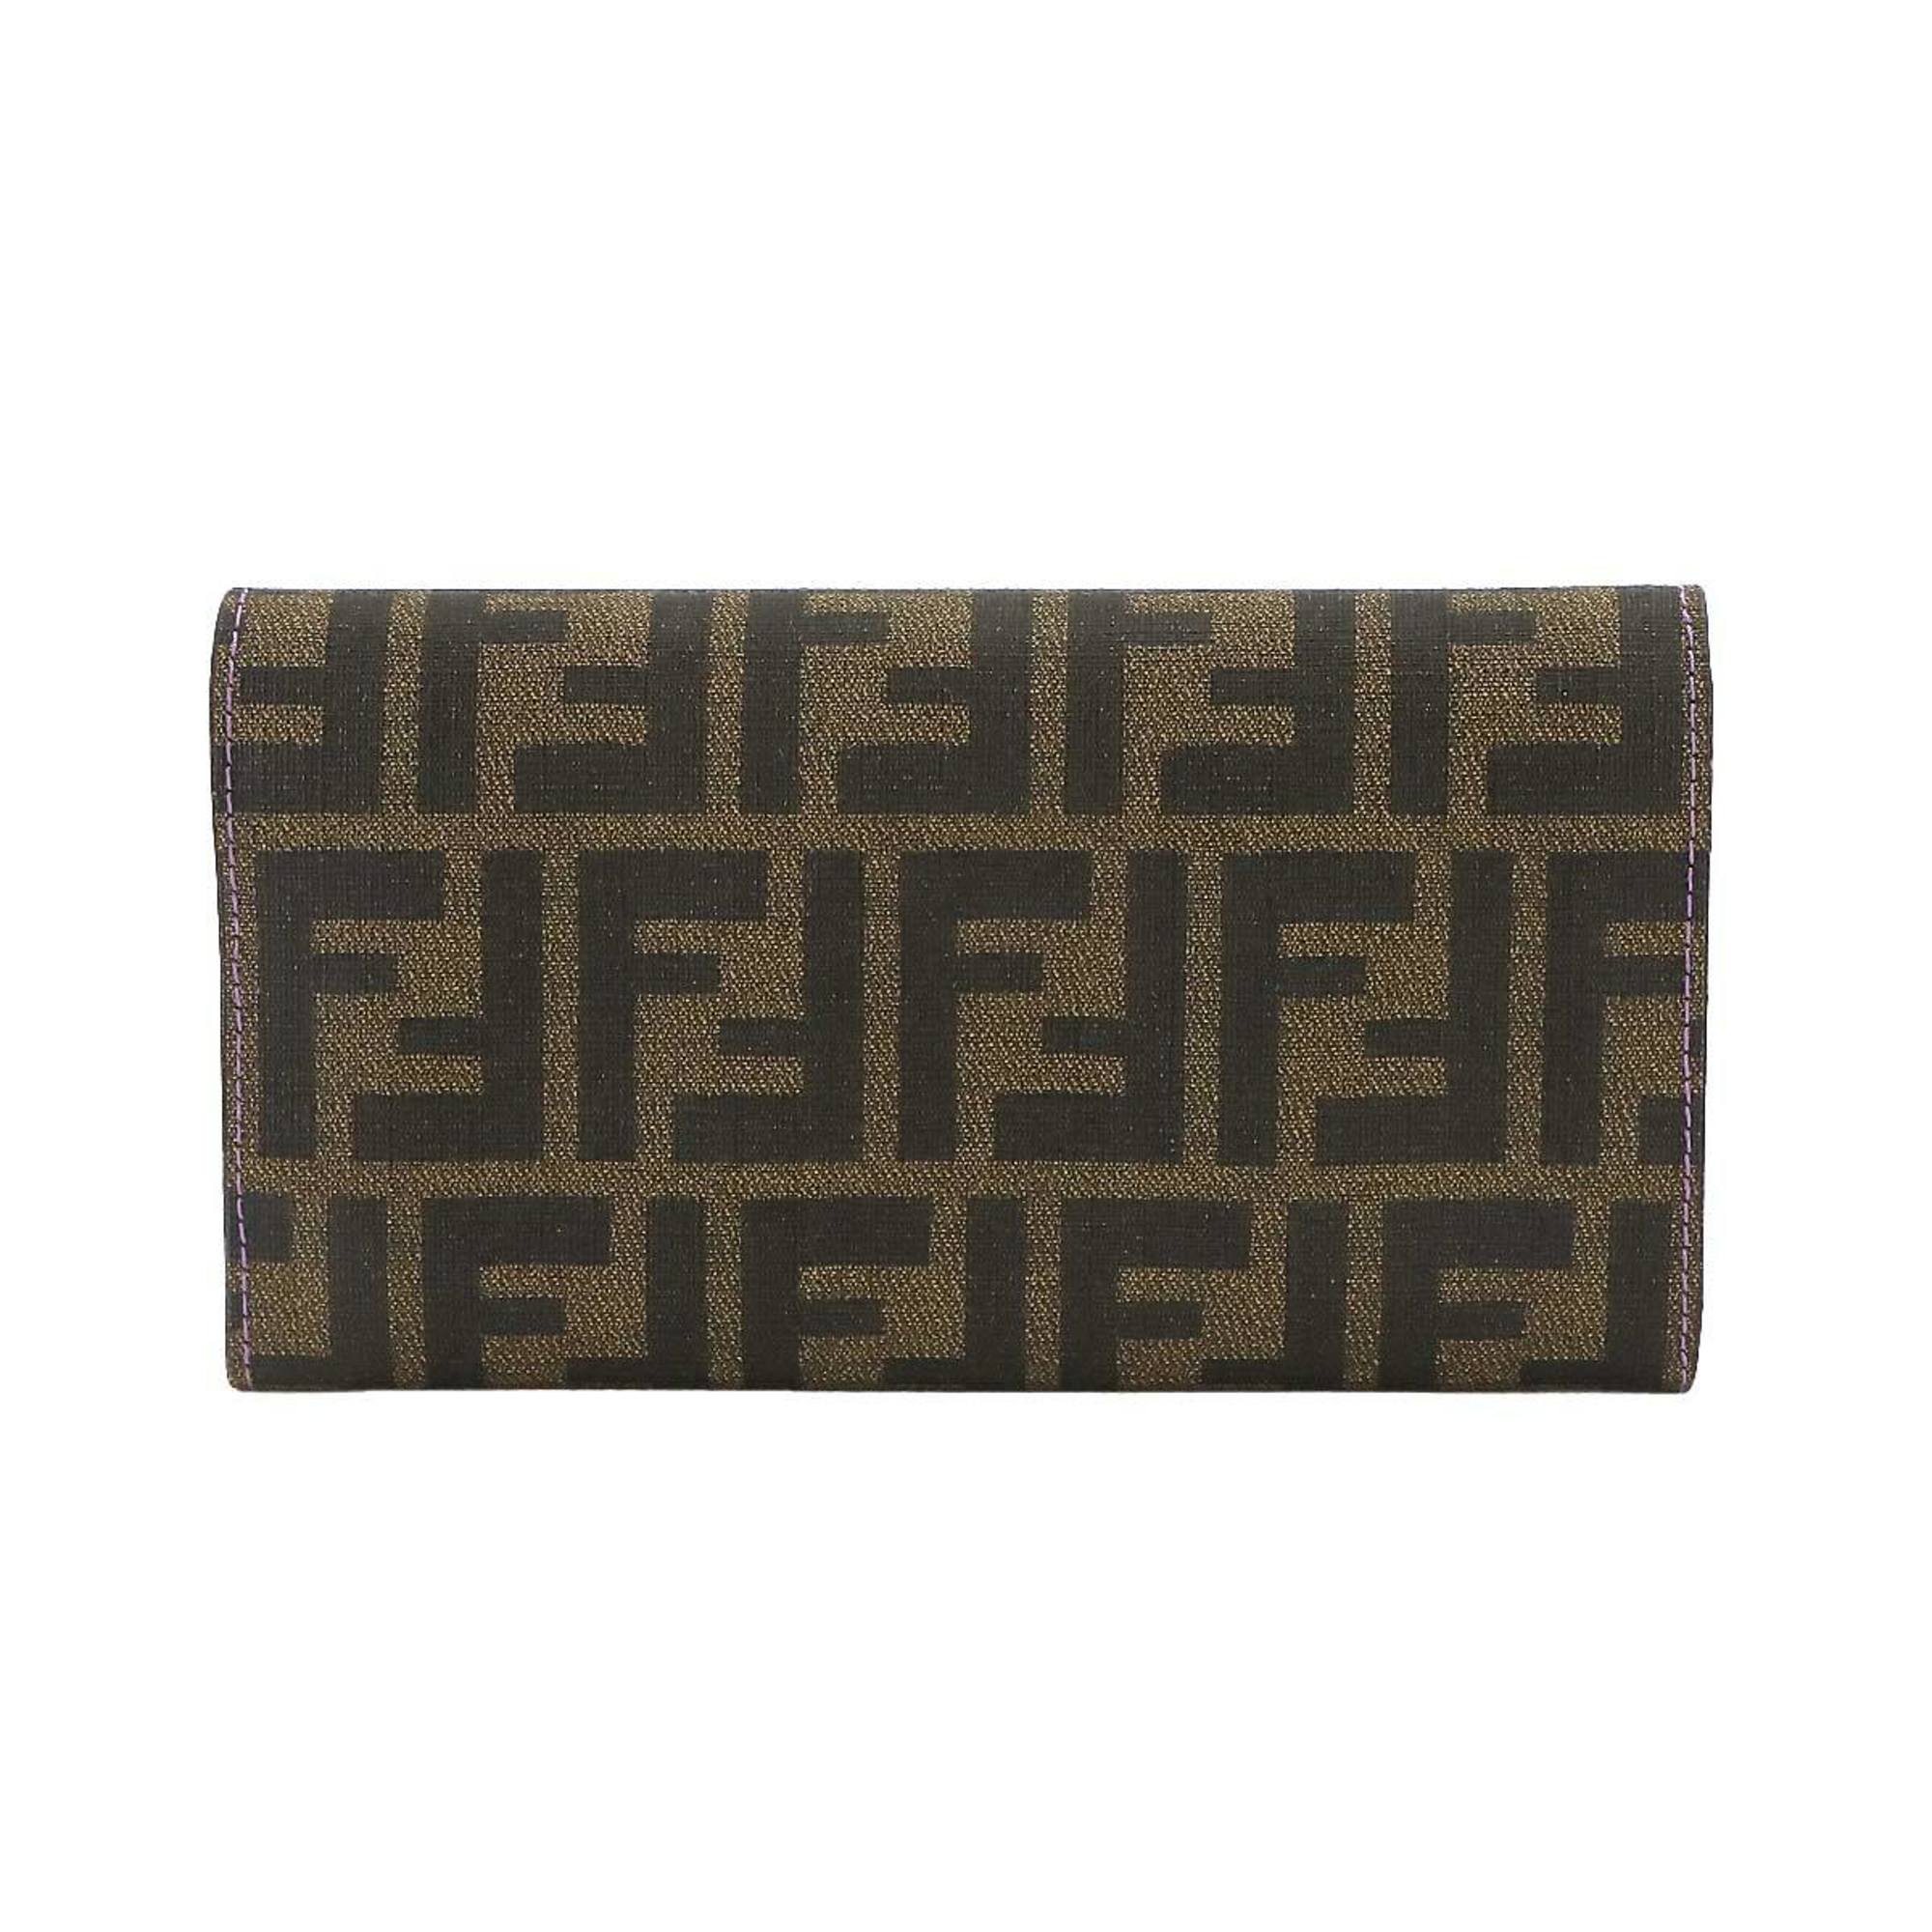 FENDI Fendi Zucca pattern bi-fold long wallet PVC leather brown purple 8M0000 gold metal fittings Wallet